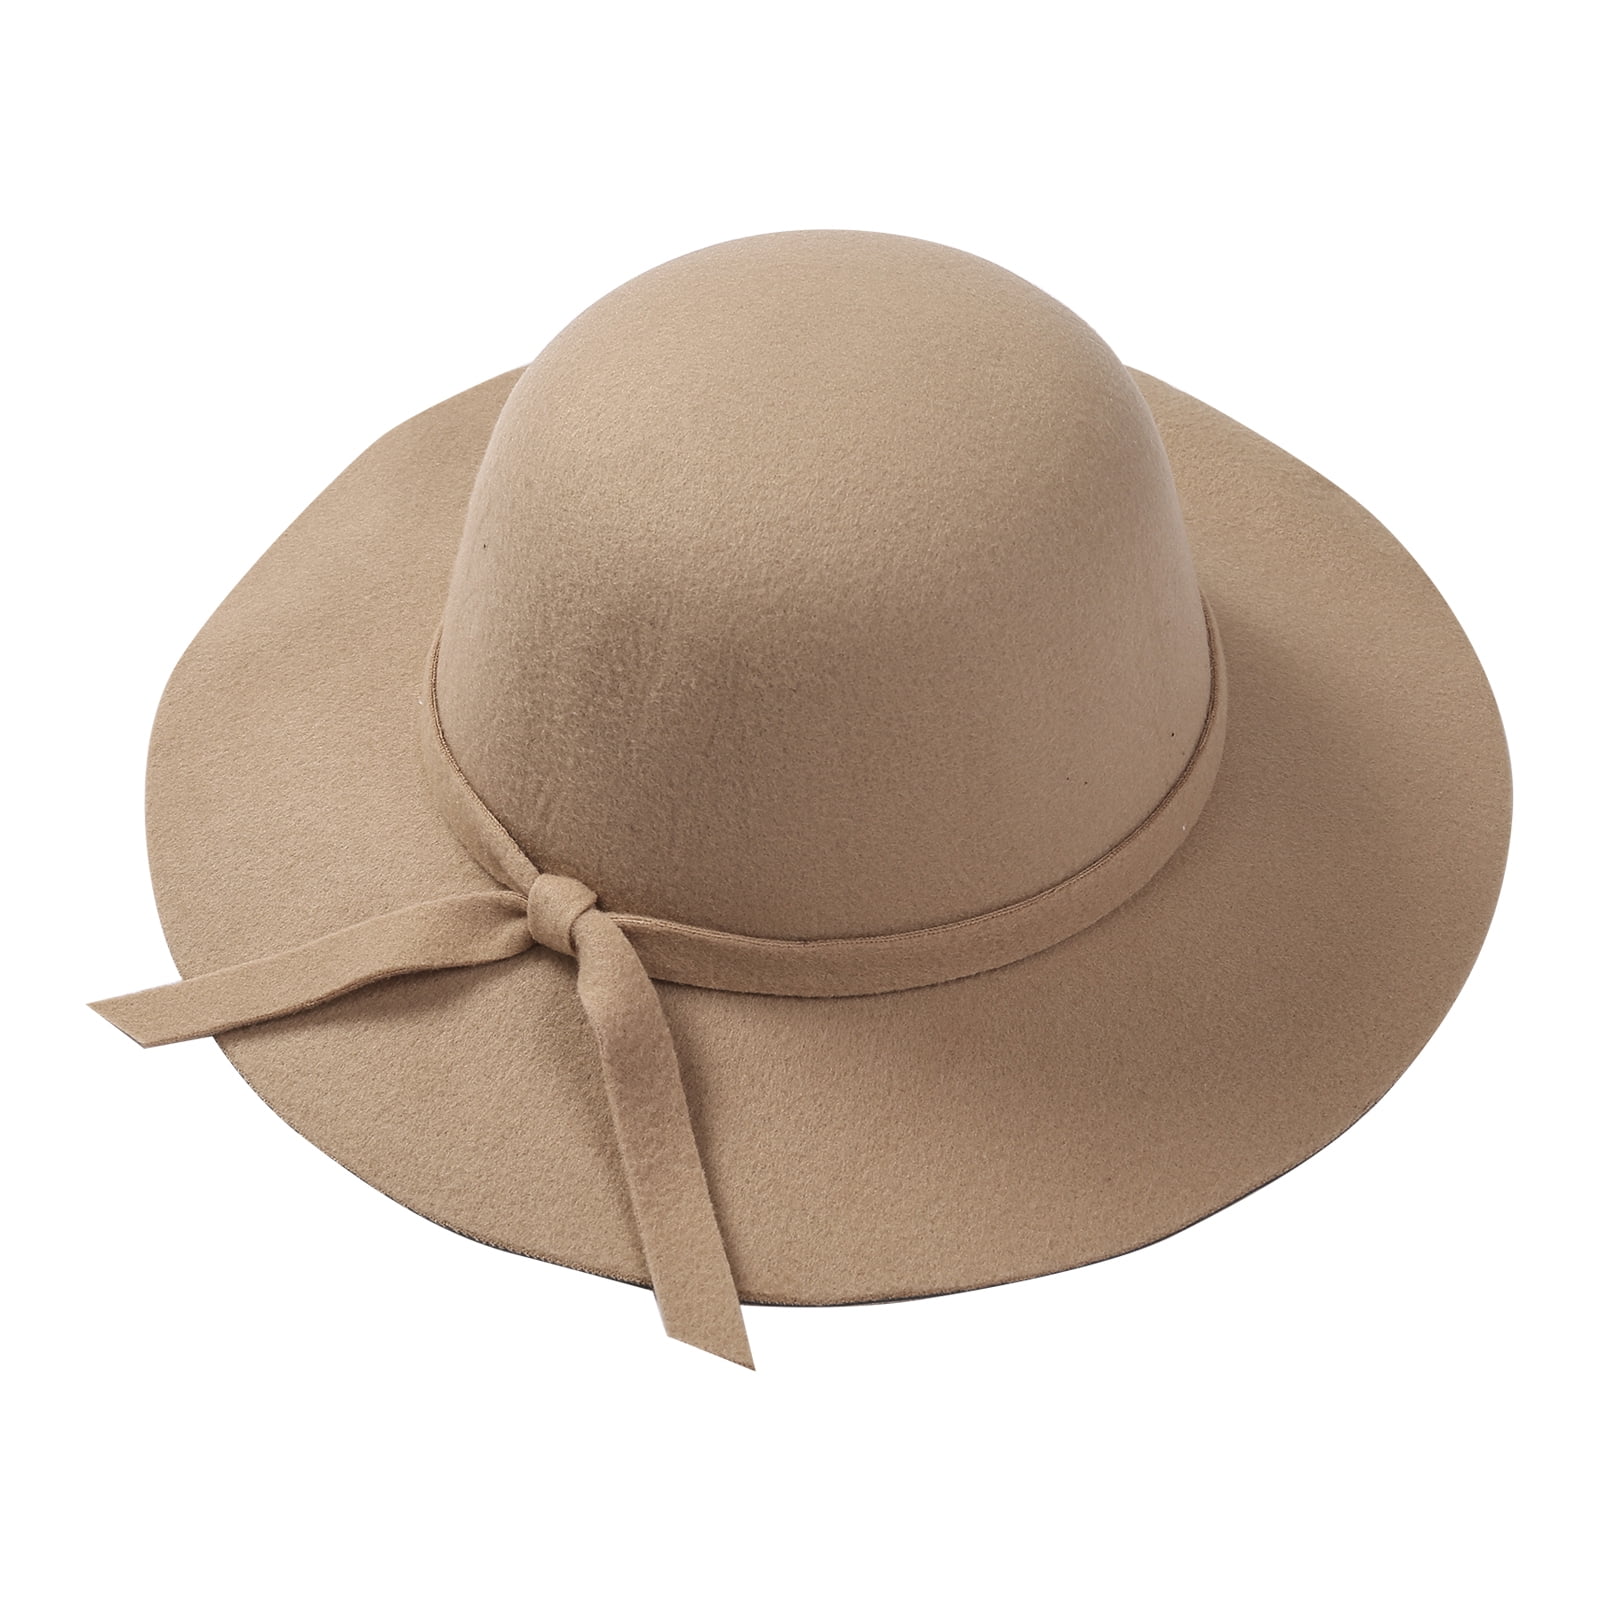 Discretely Kiribaku O.O Hat Kids Hat Boy Girl Vintage Adjustable Baseball Caps Sun Cap Unisex Outdoor Black